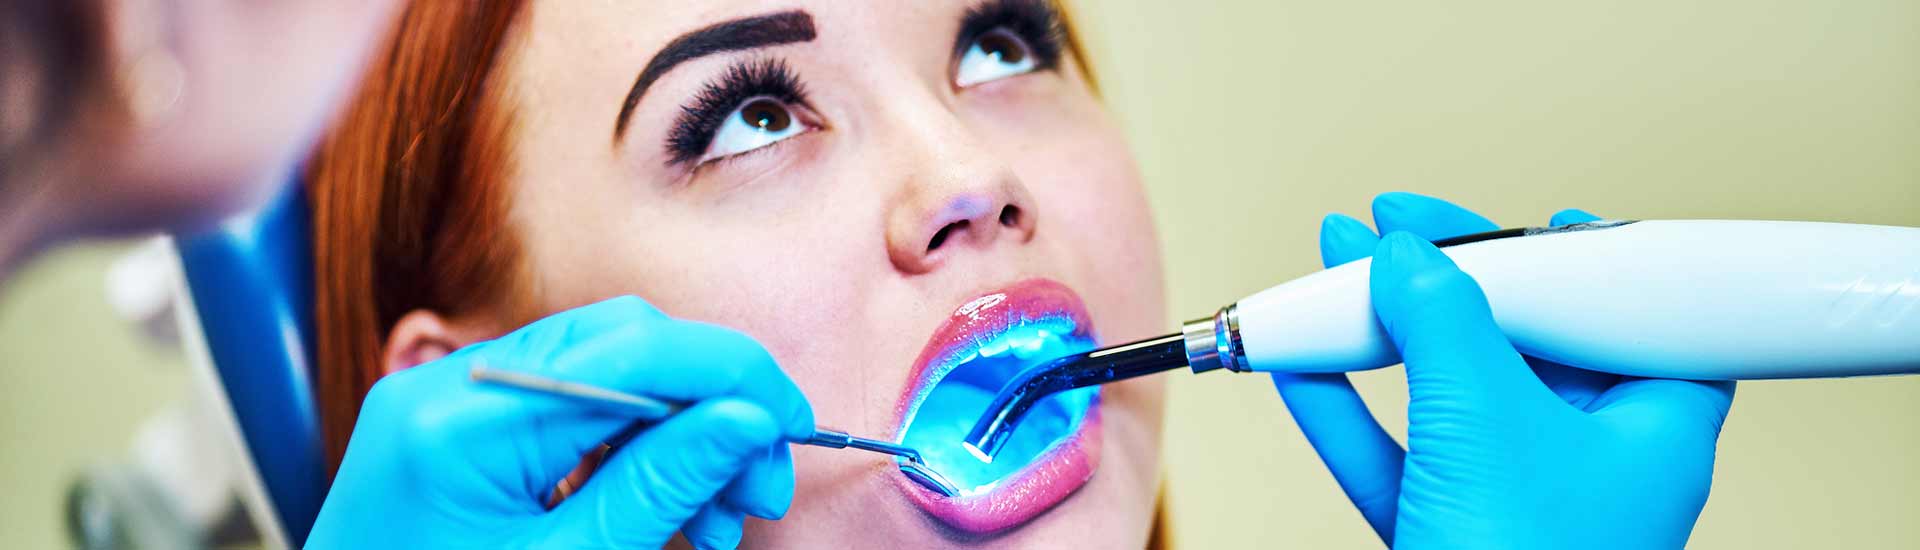 Laser dental treatment